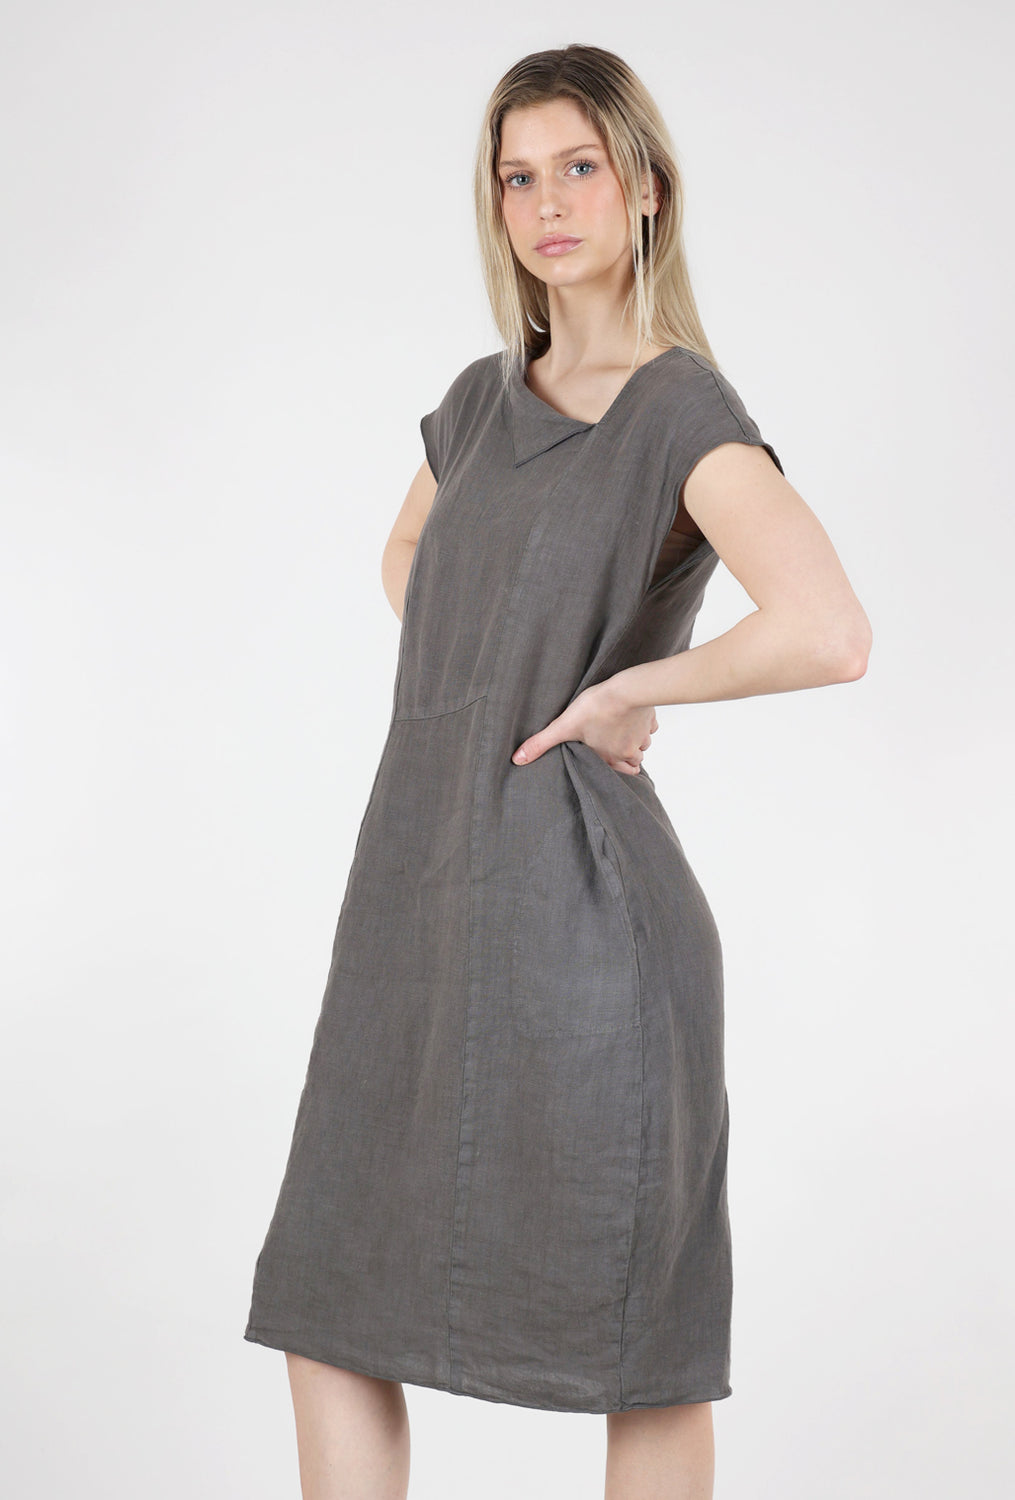 Fenini Drape-Neck Linen Dress, Dusk Gray 